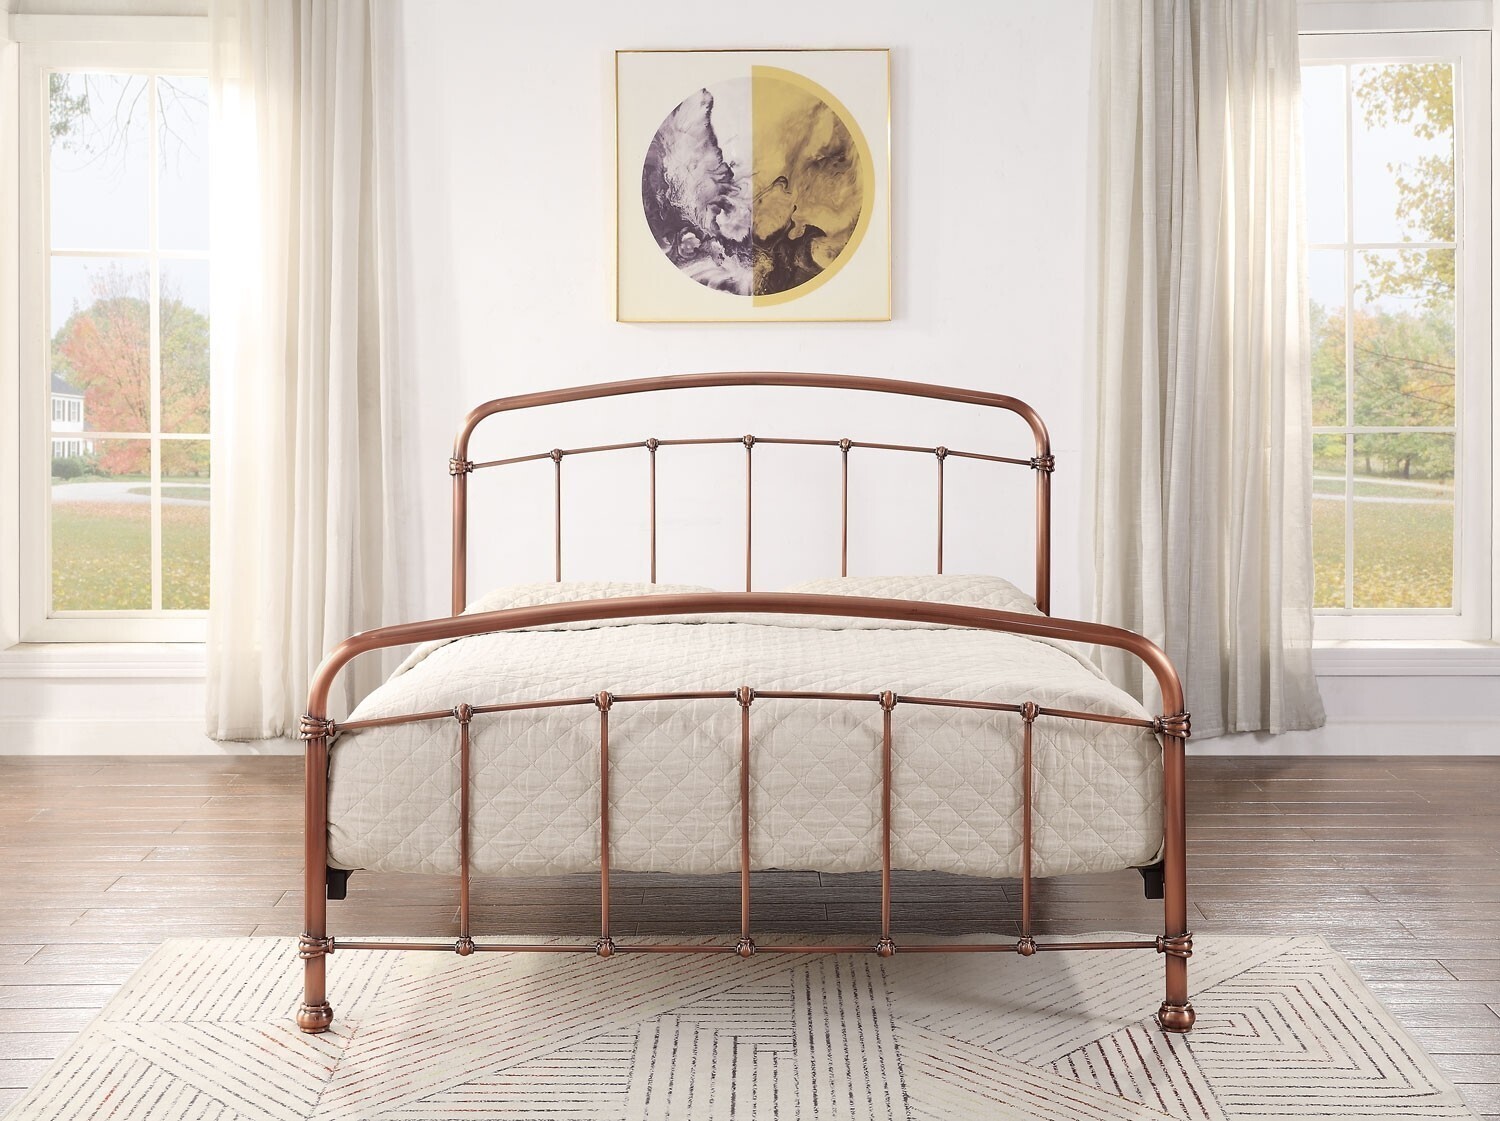 Somerville Queen Bed Frame - Antique